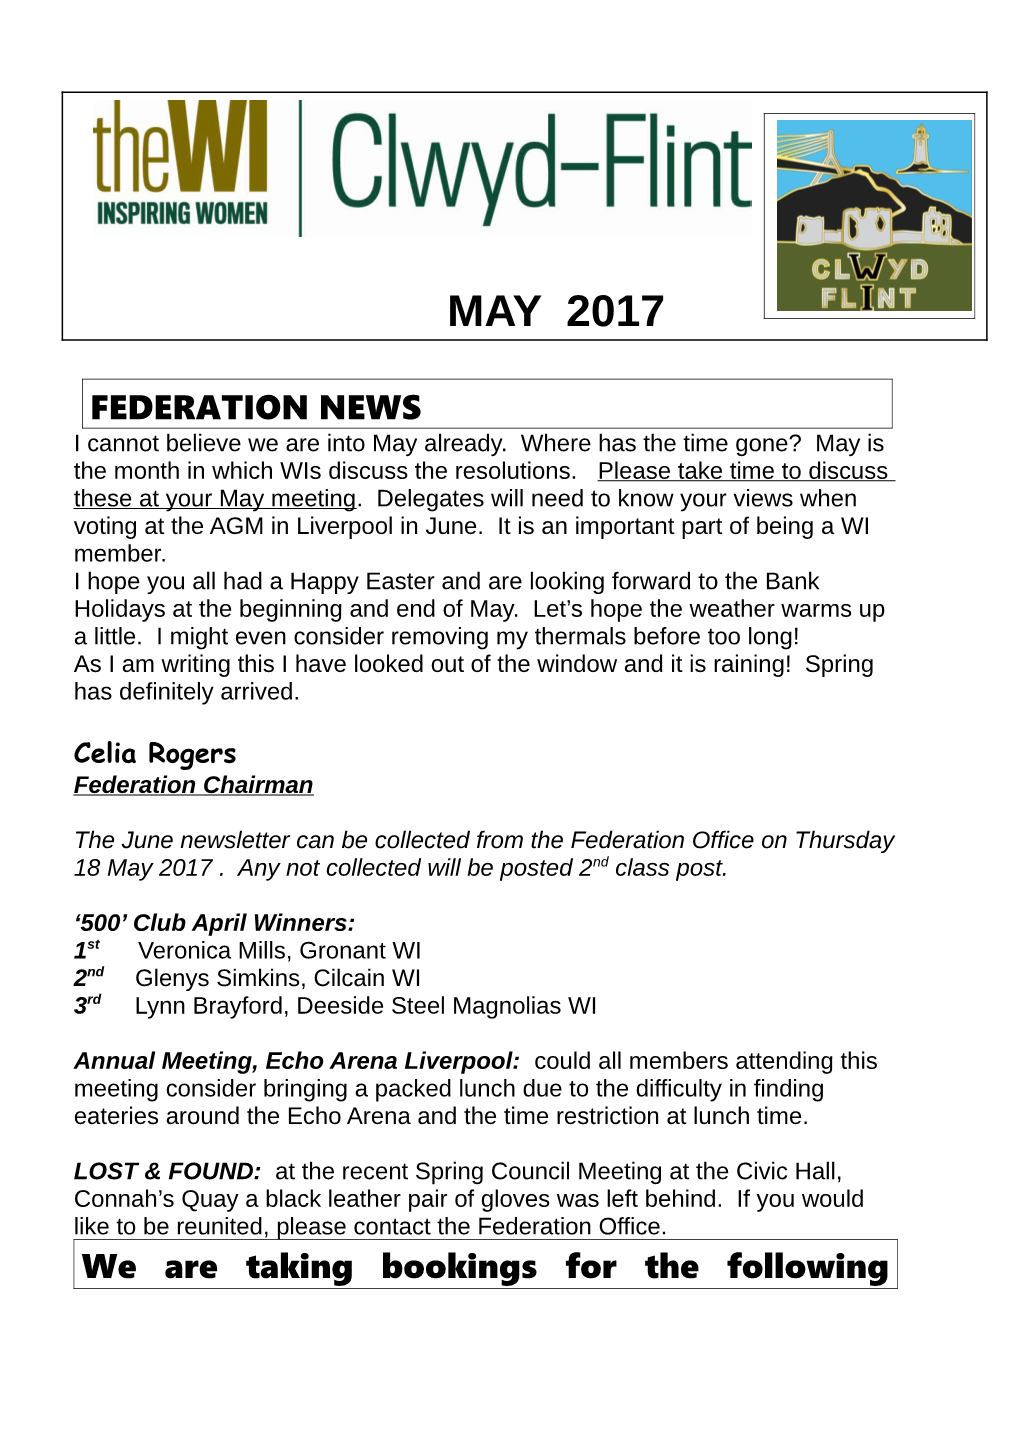 Federation News